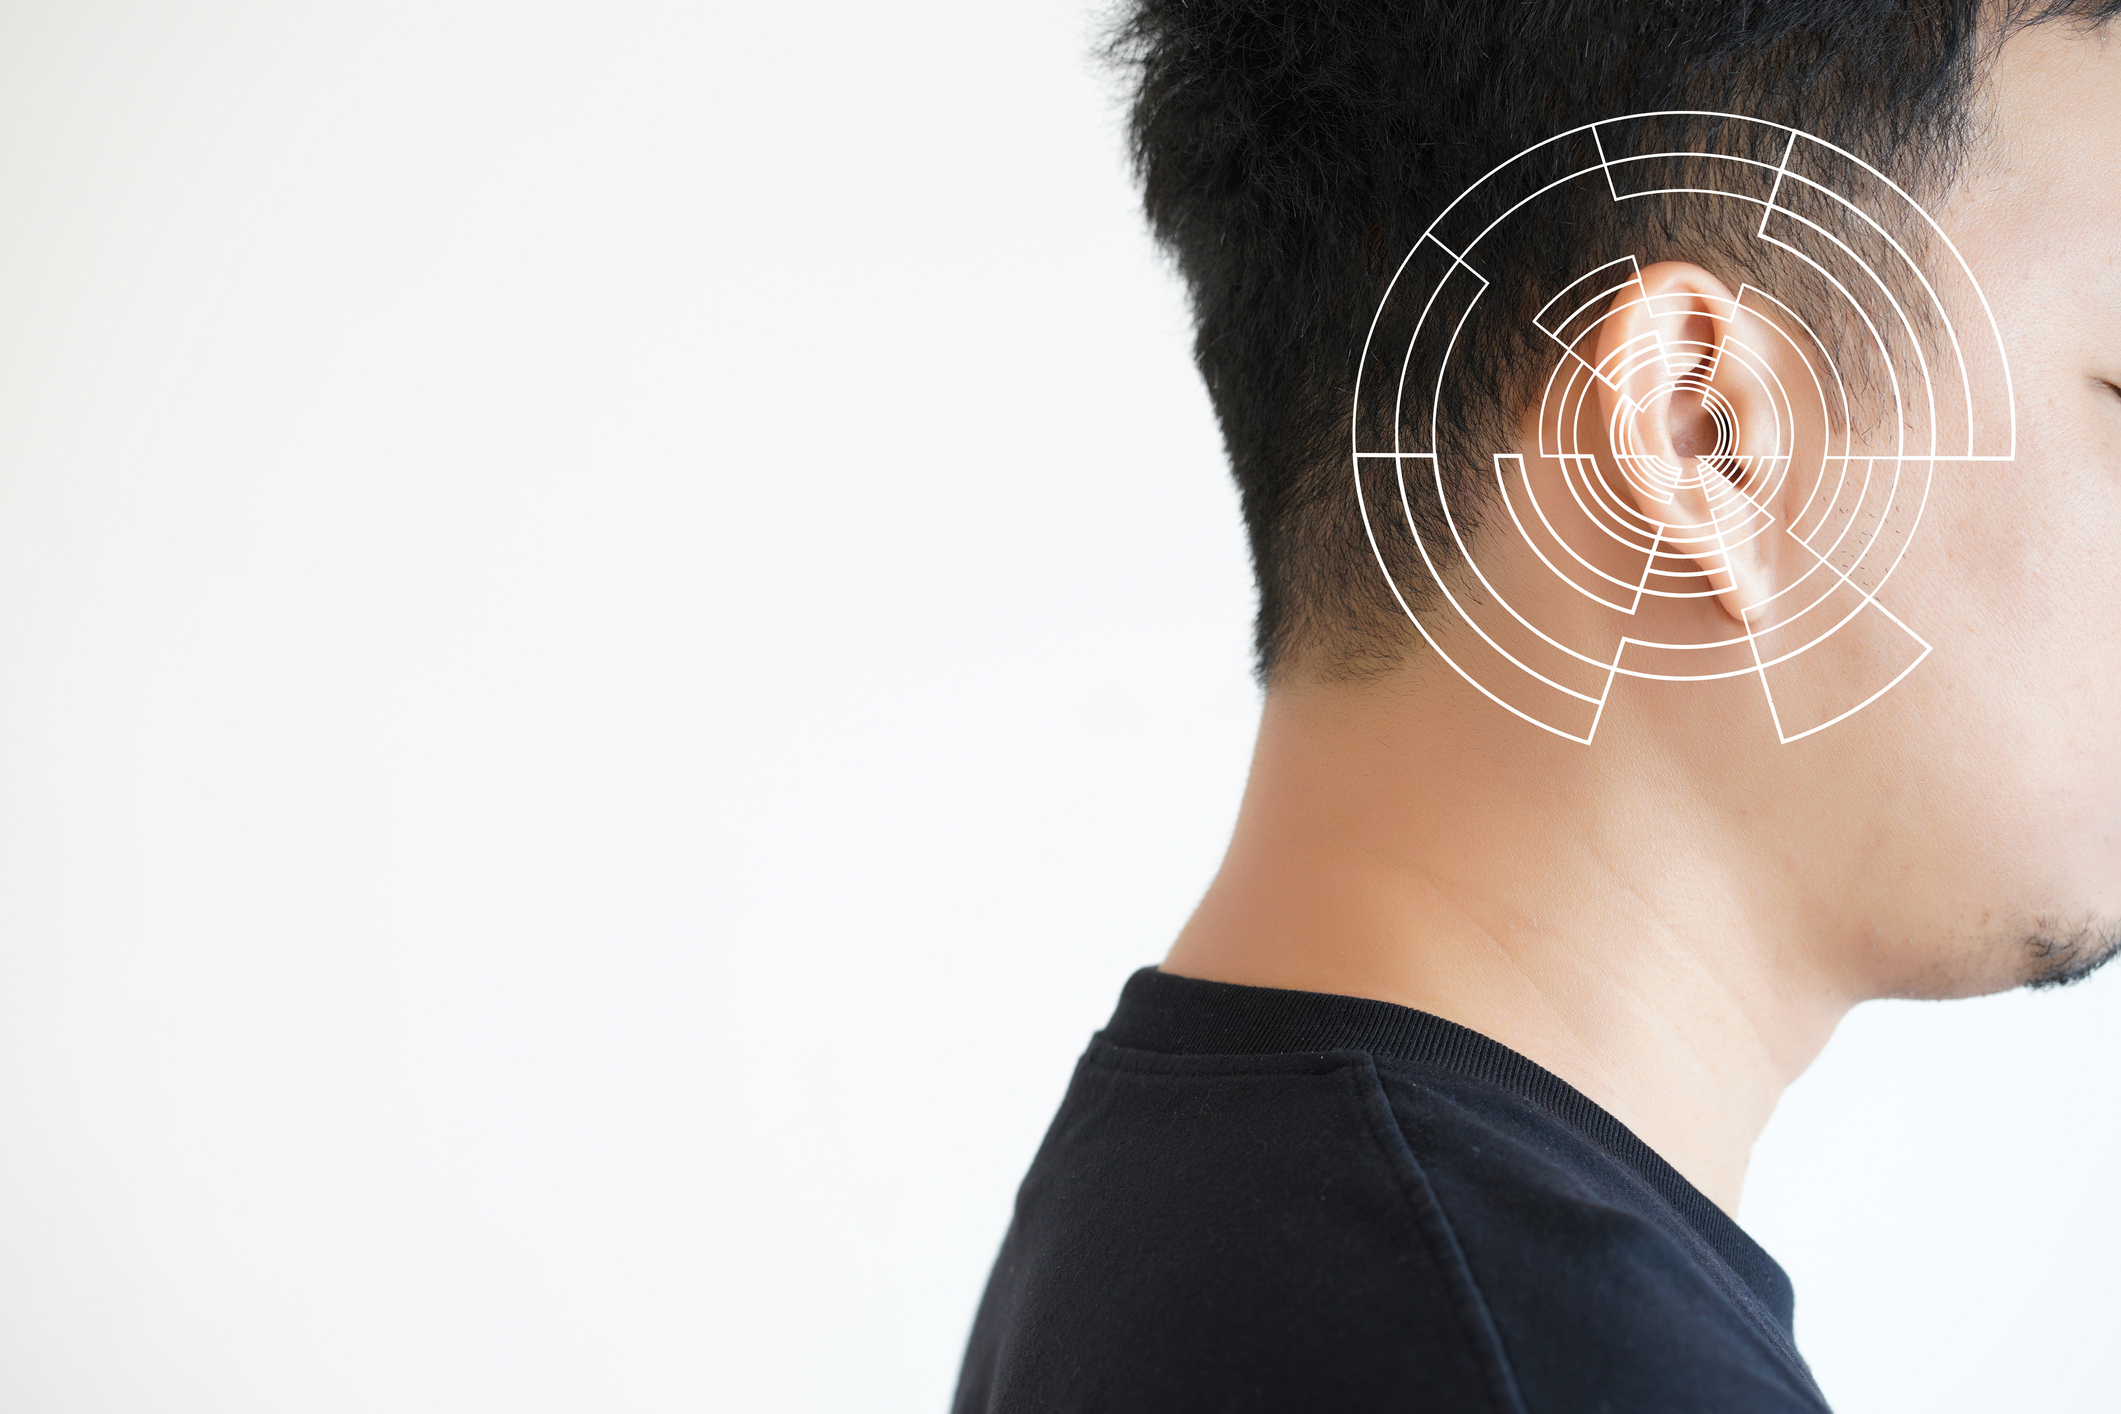 Young man hearing loss  sound waves simulation technology